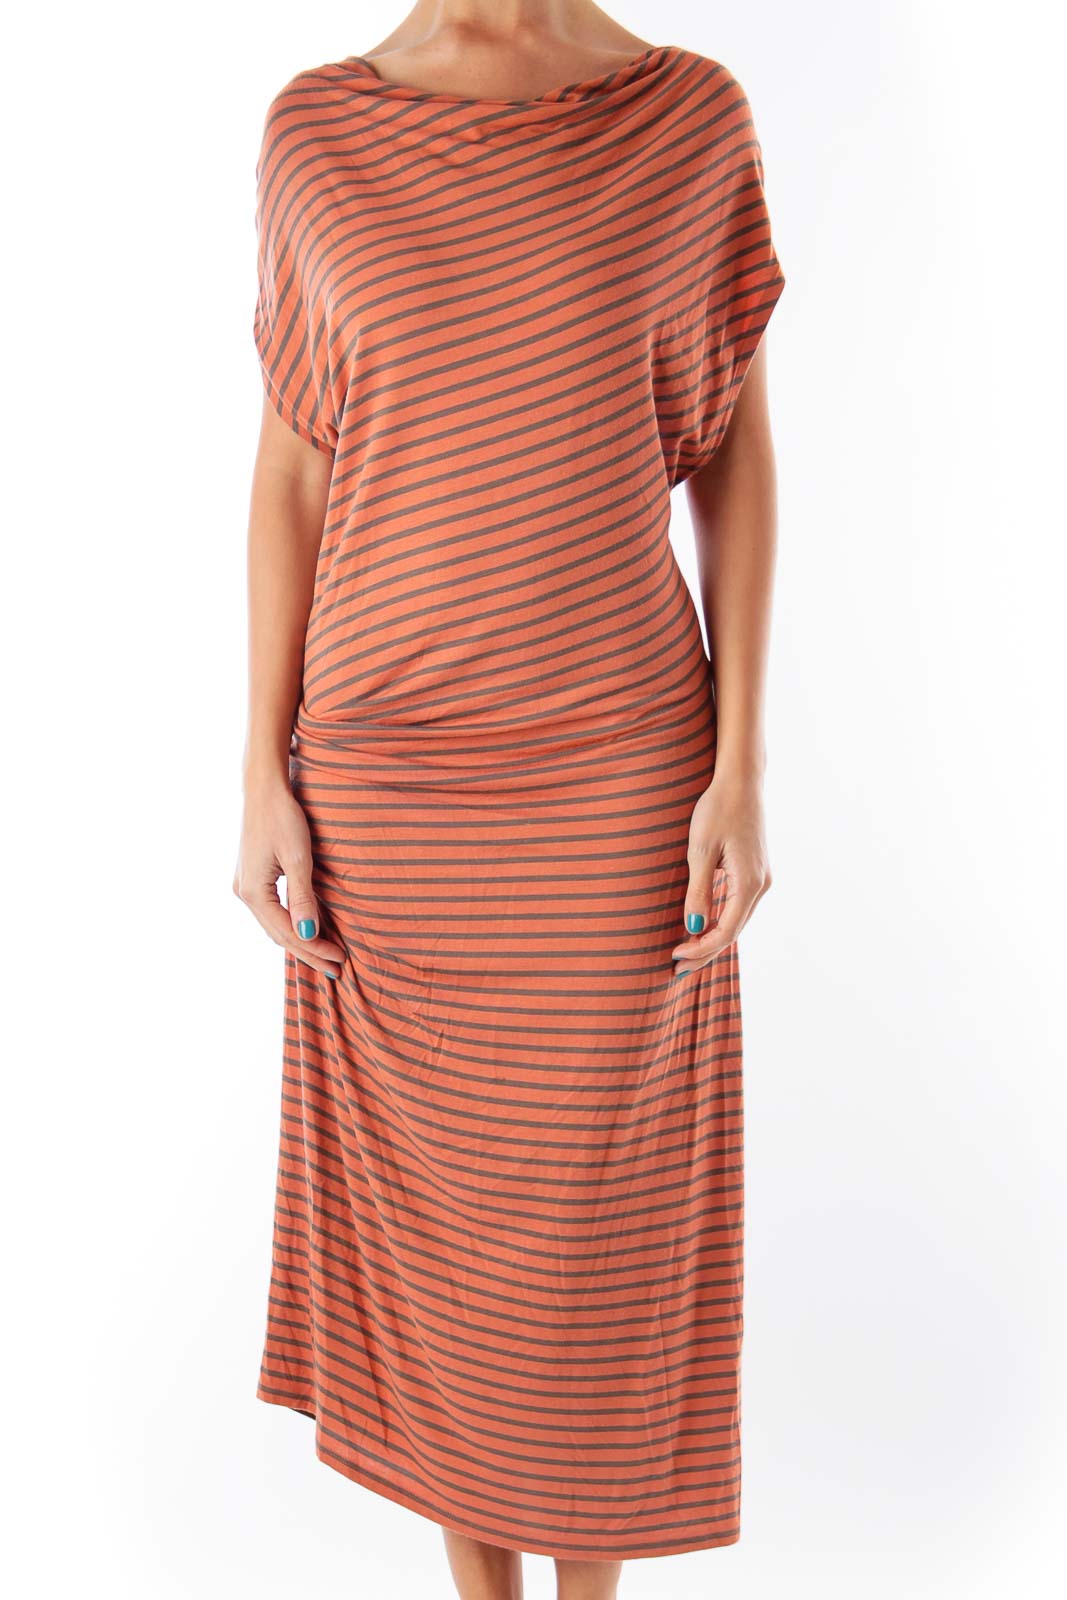 Orange & Gray Stripe Dress Front